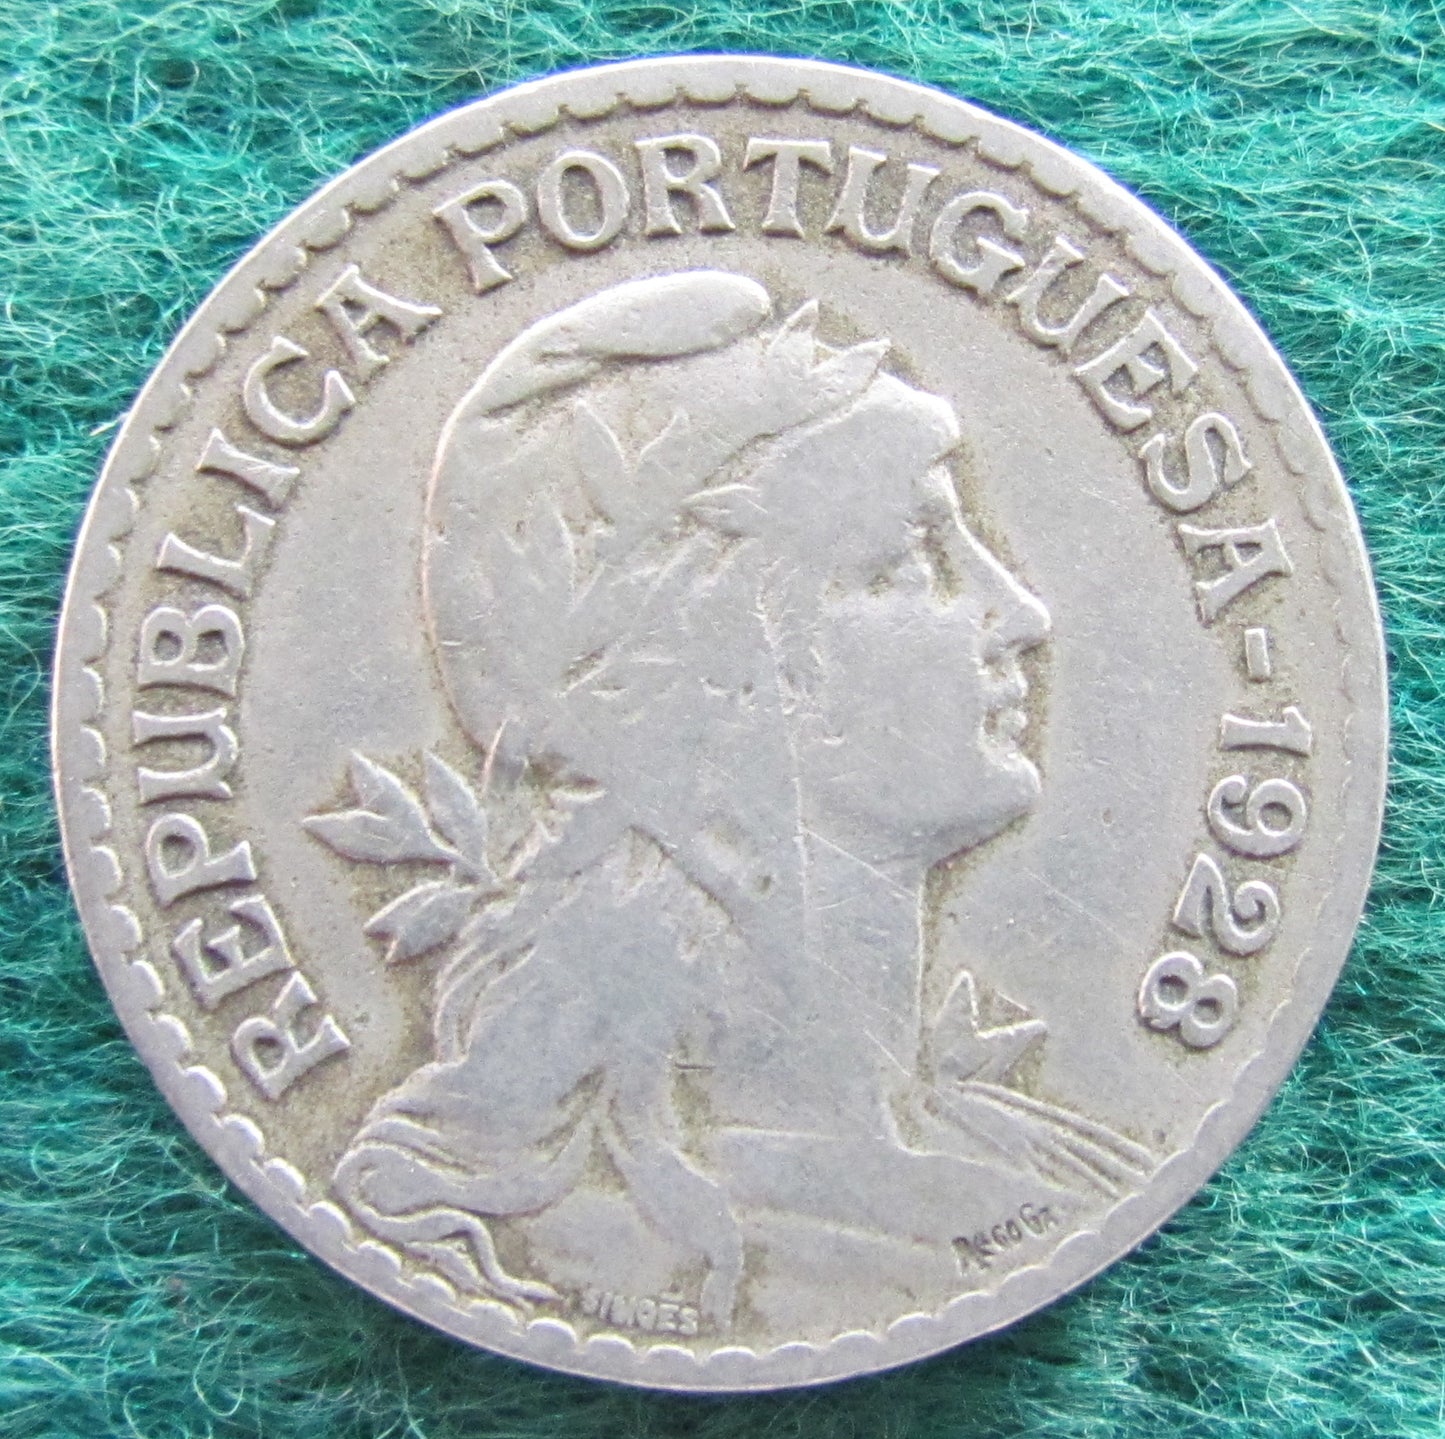 Portugal 1928 1 Escudo Coin - Circulated